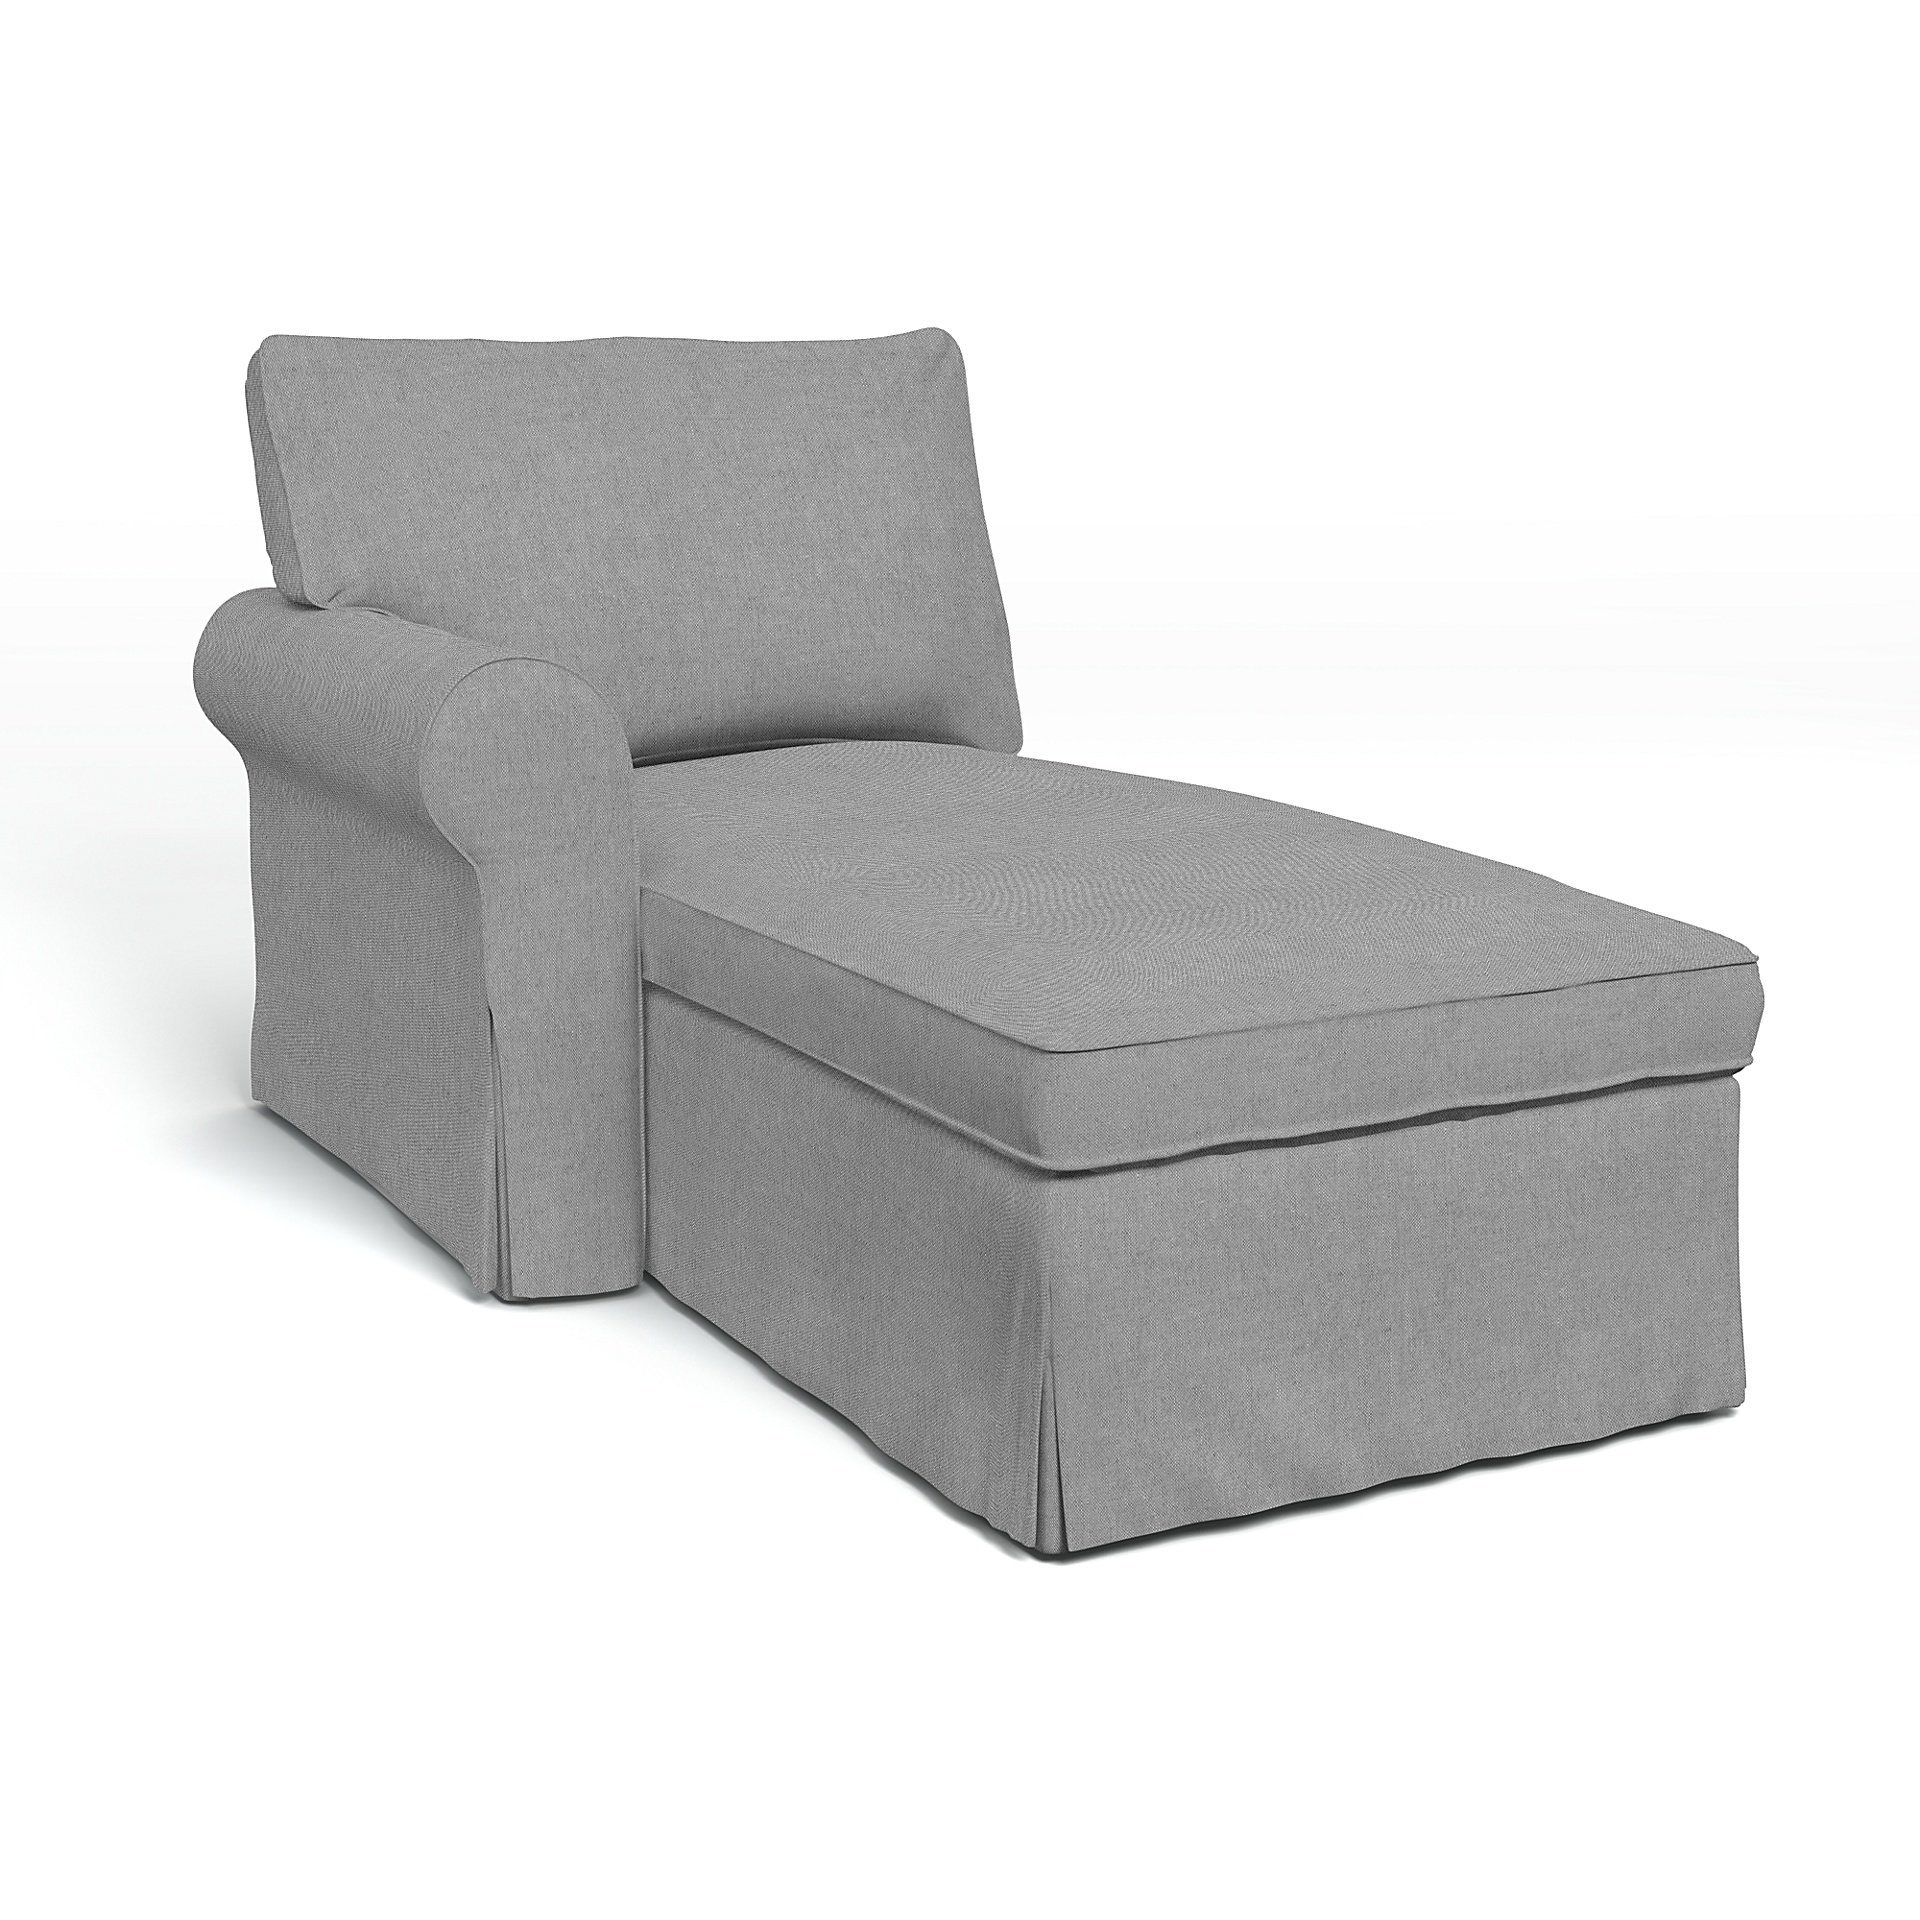 IKEA - Ektorp Chaise with Left Armrest Cover, Graphite, Linen - Bemz